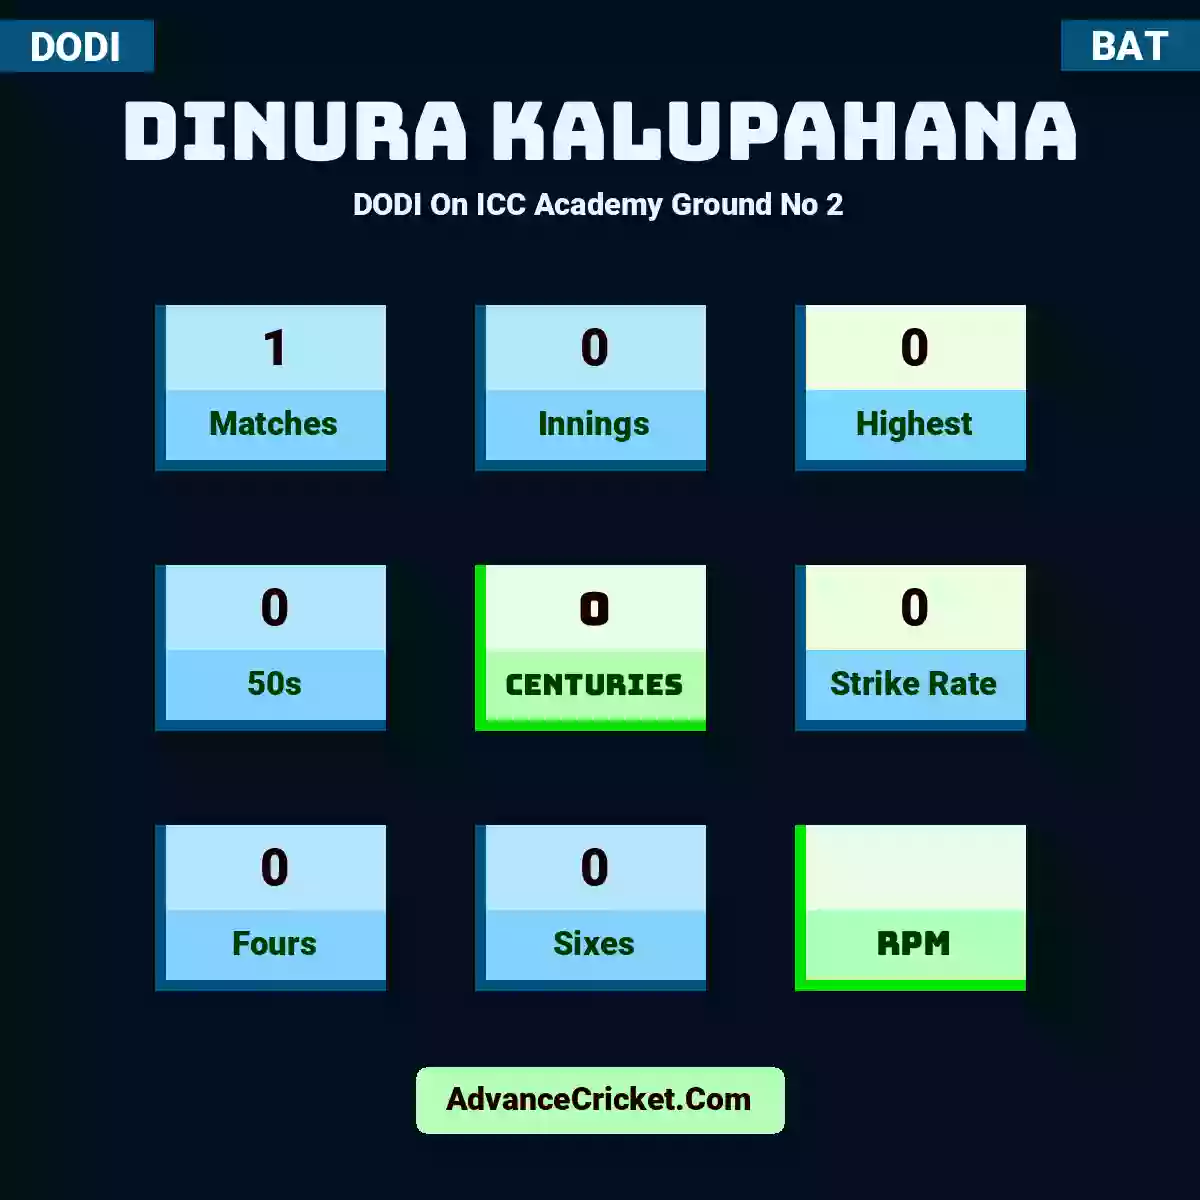 Dinura Kalupahana DODI  On ICC Academy Ground No 2, Dinura Kalupahana played 1 matches, scored 0 runs as highest, 0 half-centuries, and 0 centuries, with a strike rate of 0. D.Kalupahana hit 0 fours and 0 sixes.